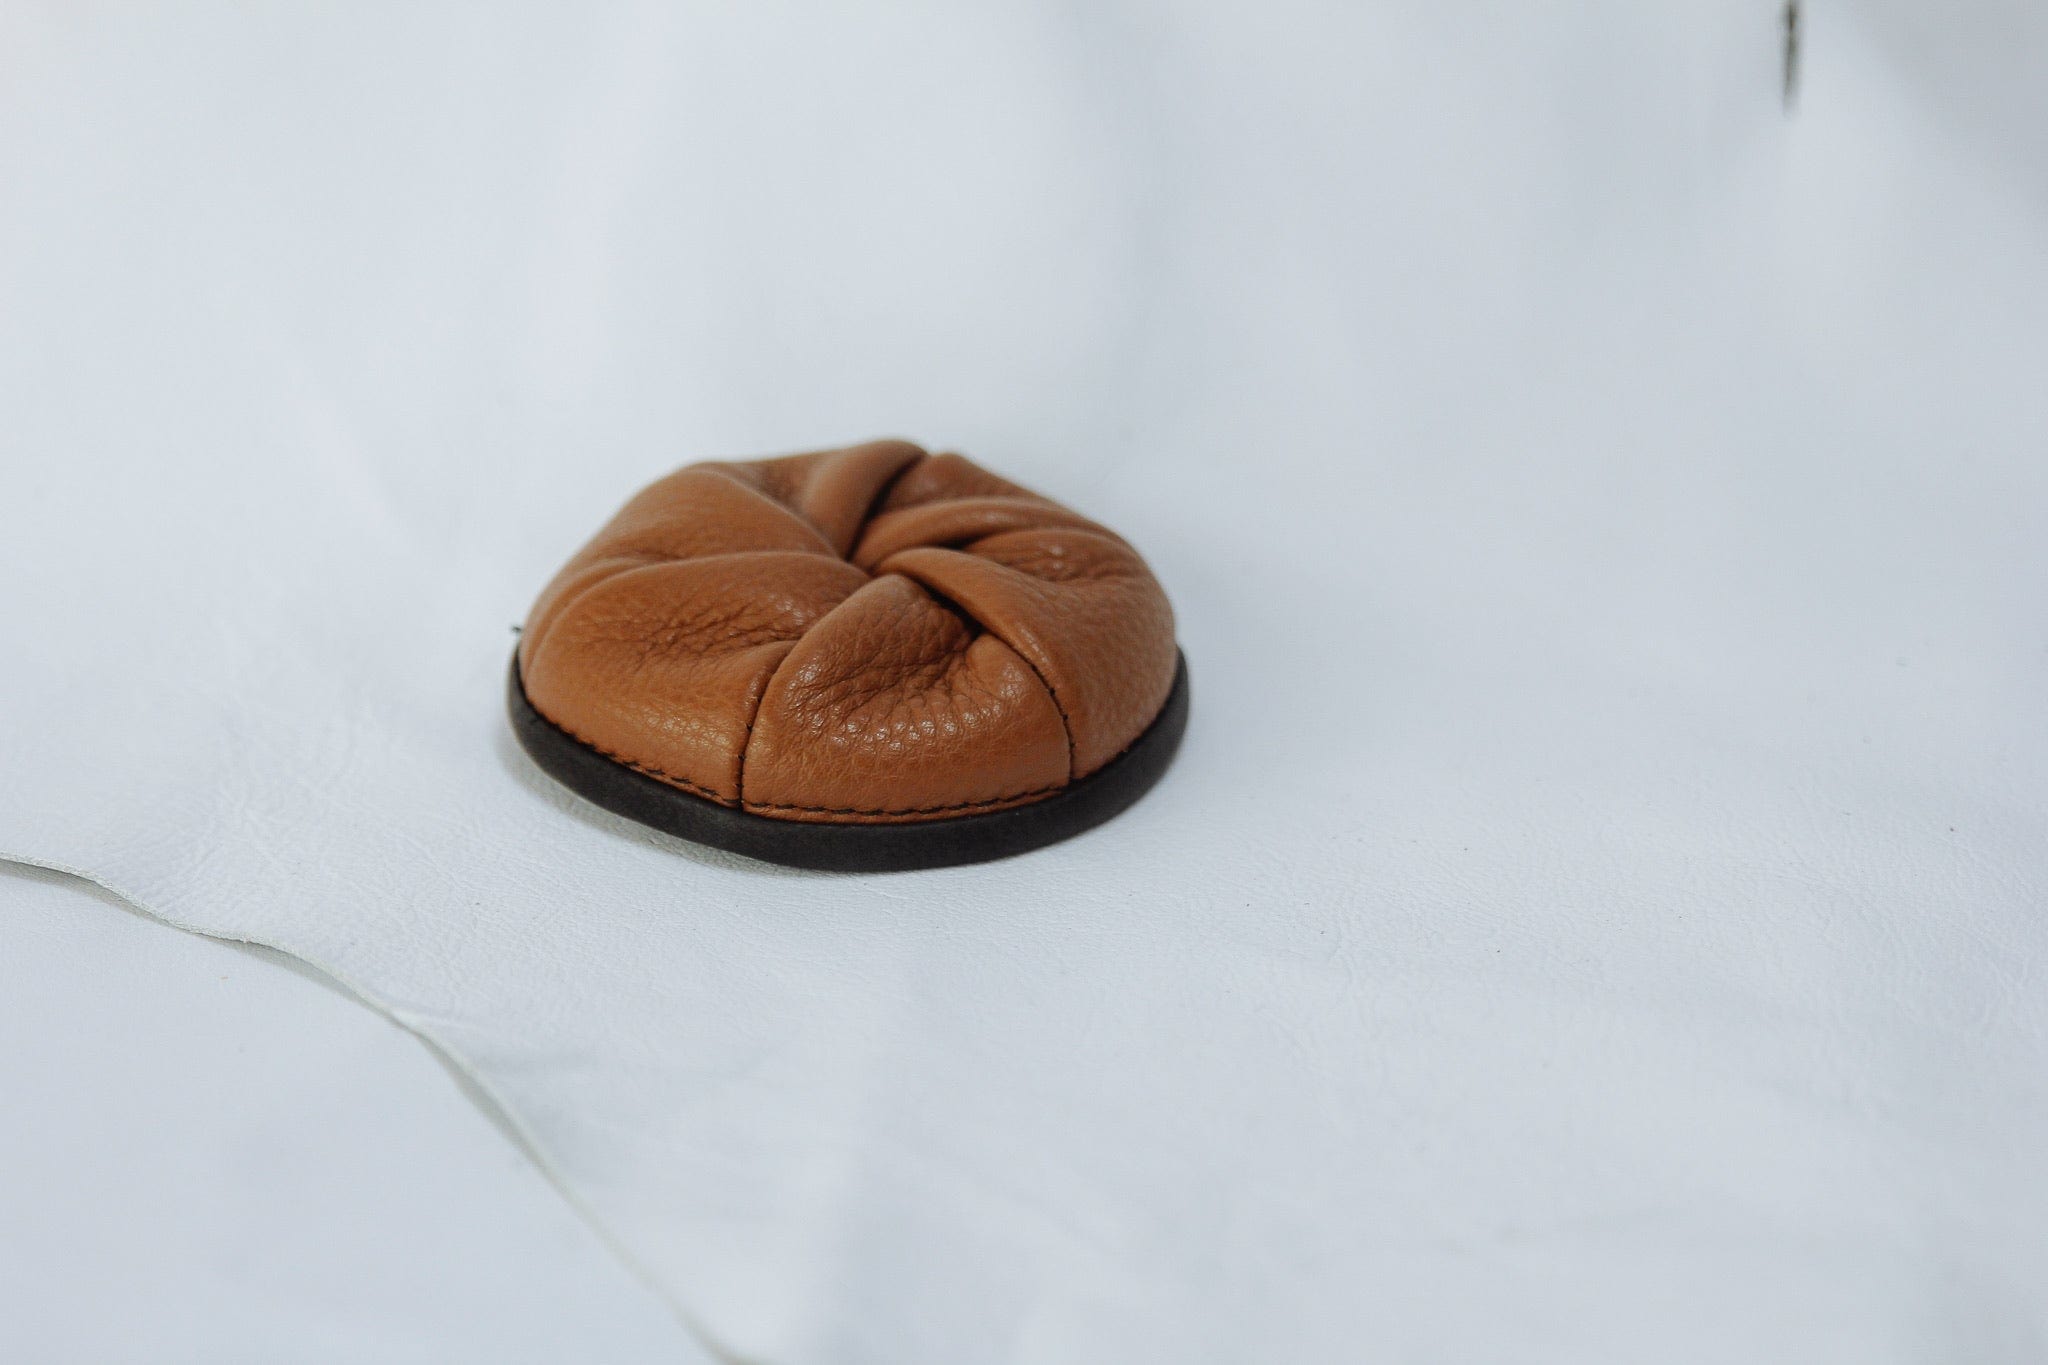 Kangaroo Scrotum Coin Pouch - Medium Size : Amazon.ca: Home